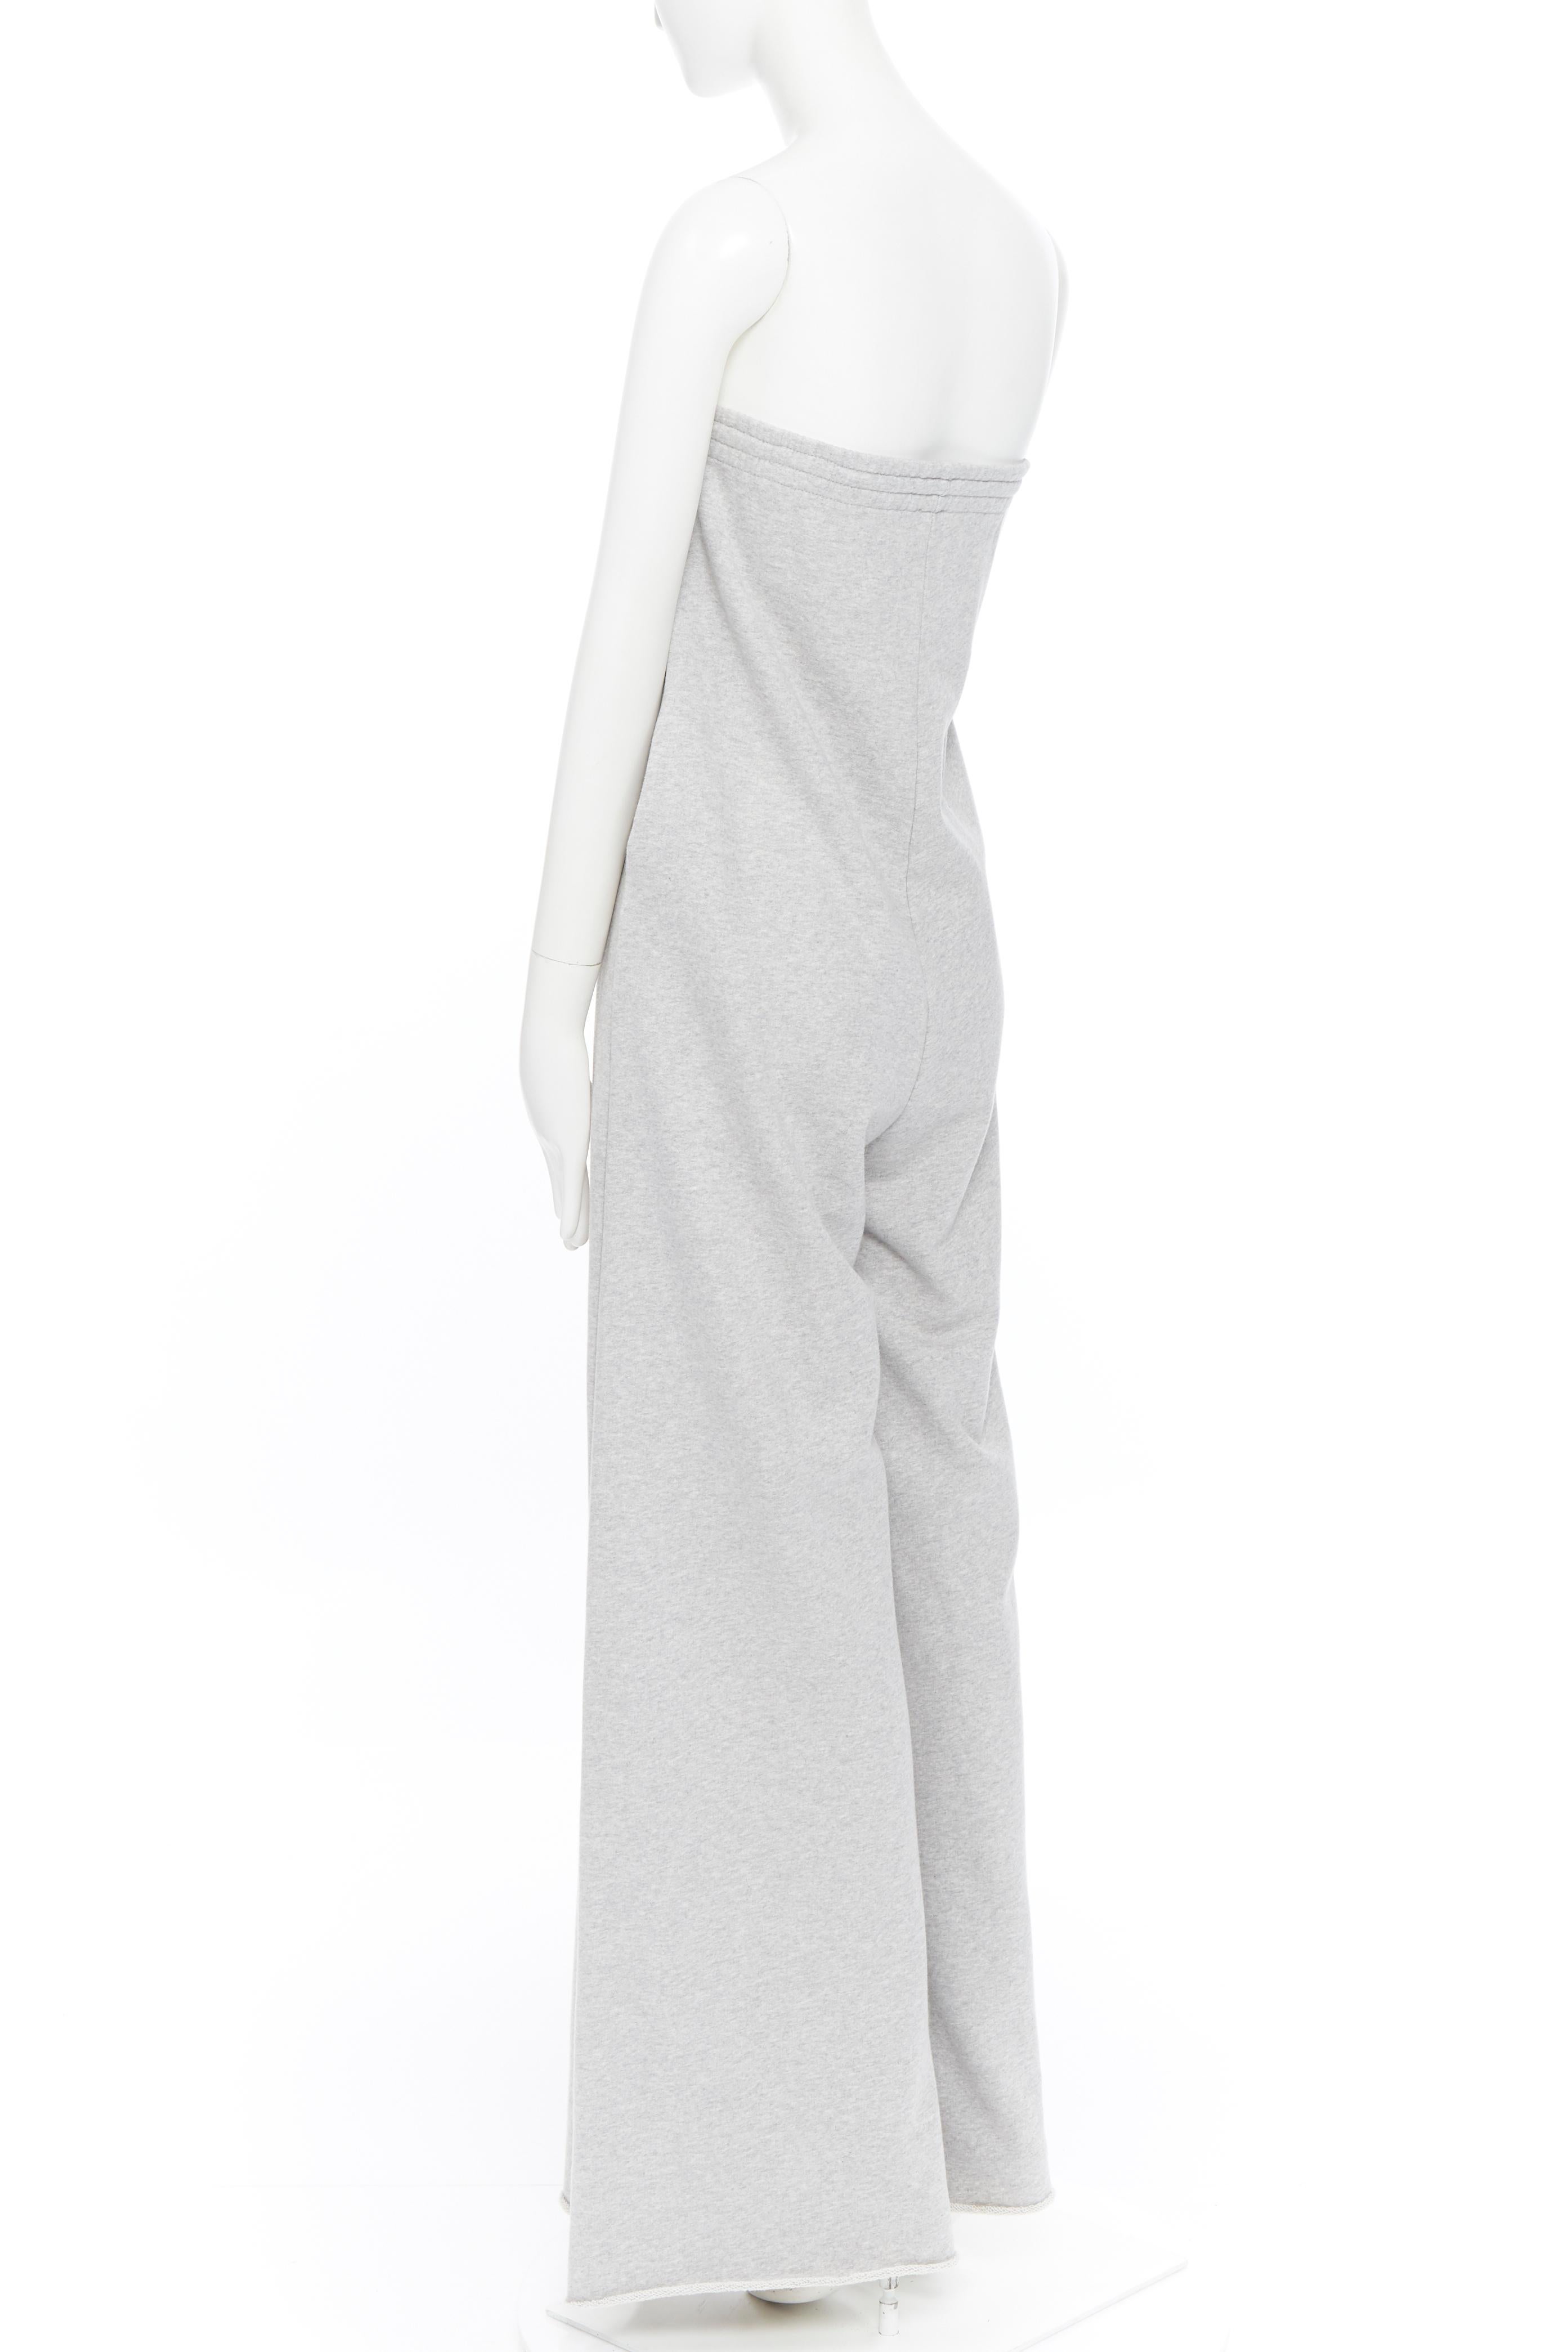 Women's new VETEMENTS AW18 grey cotton oversized extreme wide leg sweatpants jumpsuit XS